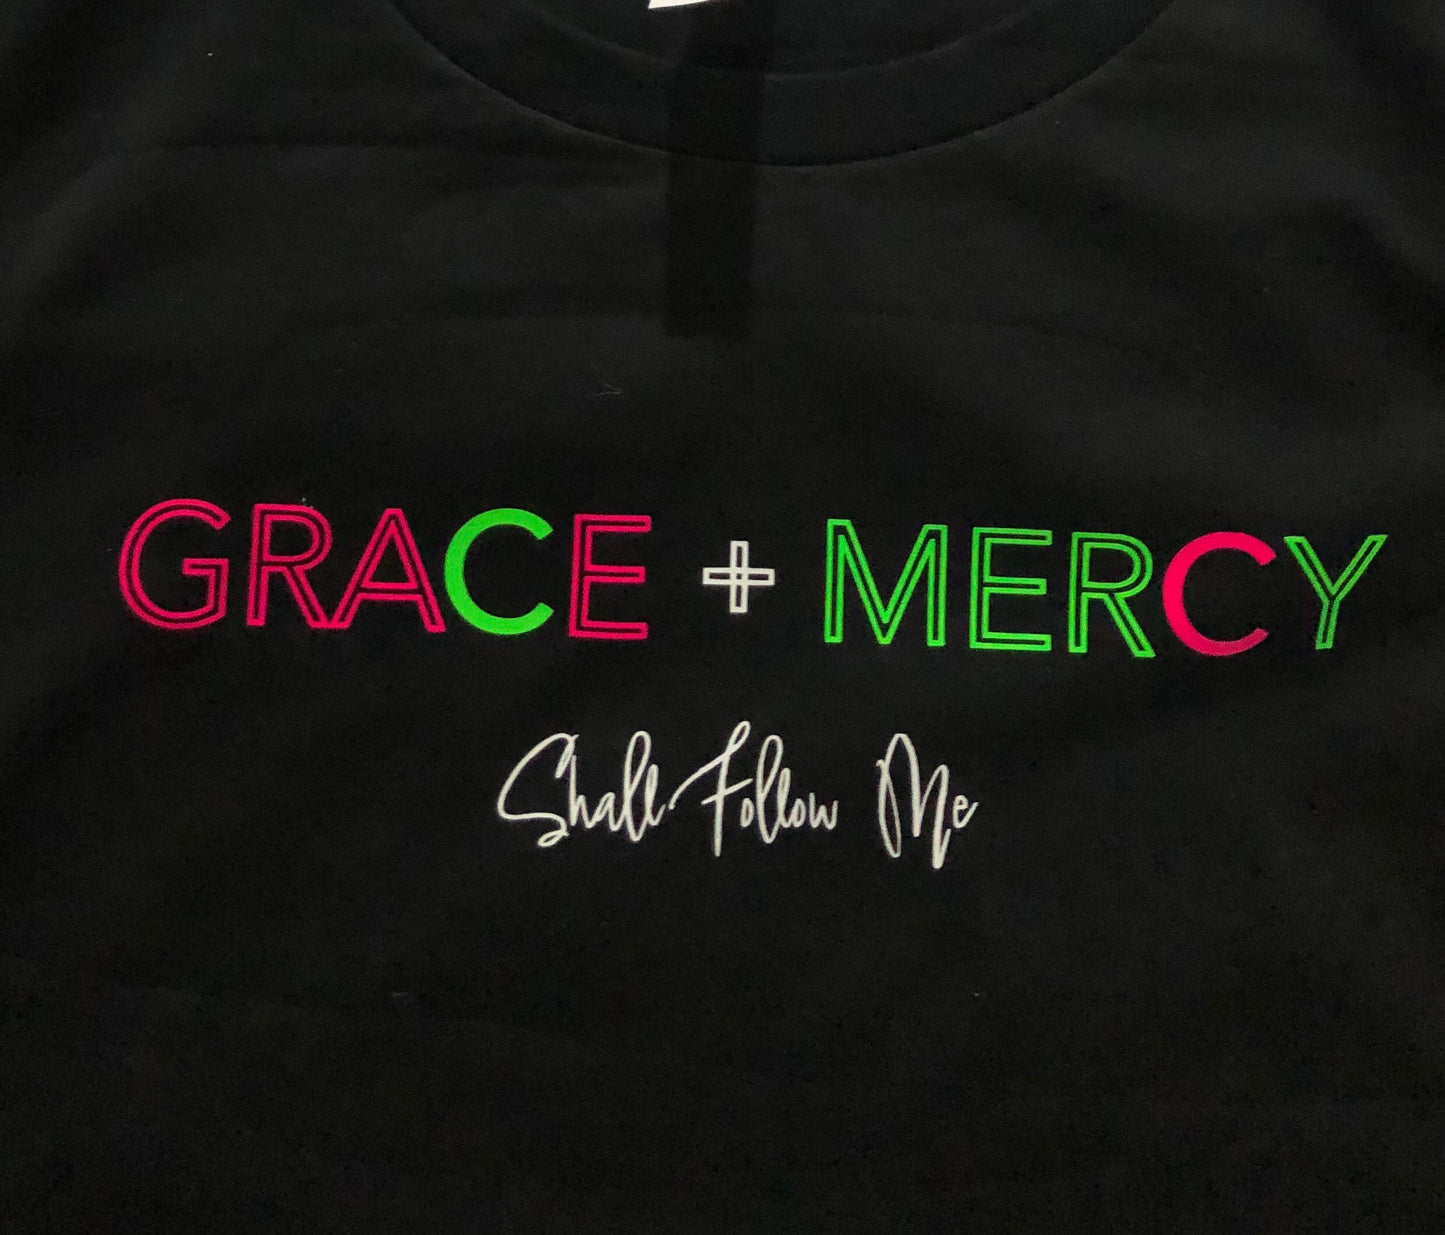 Grace, Mercy, Christian Tee, Christian Shirt, Cross Tee, Jesus Shirt, Religious Apparel, Loved Shirt, Church Shirts, Christian Tee for Women